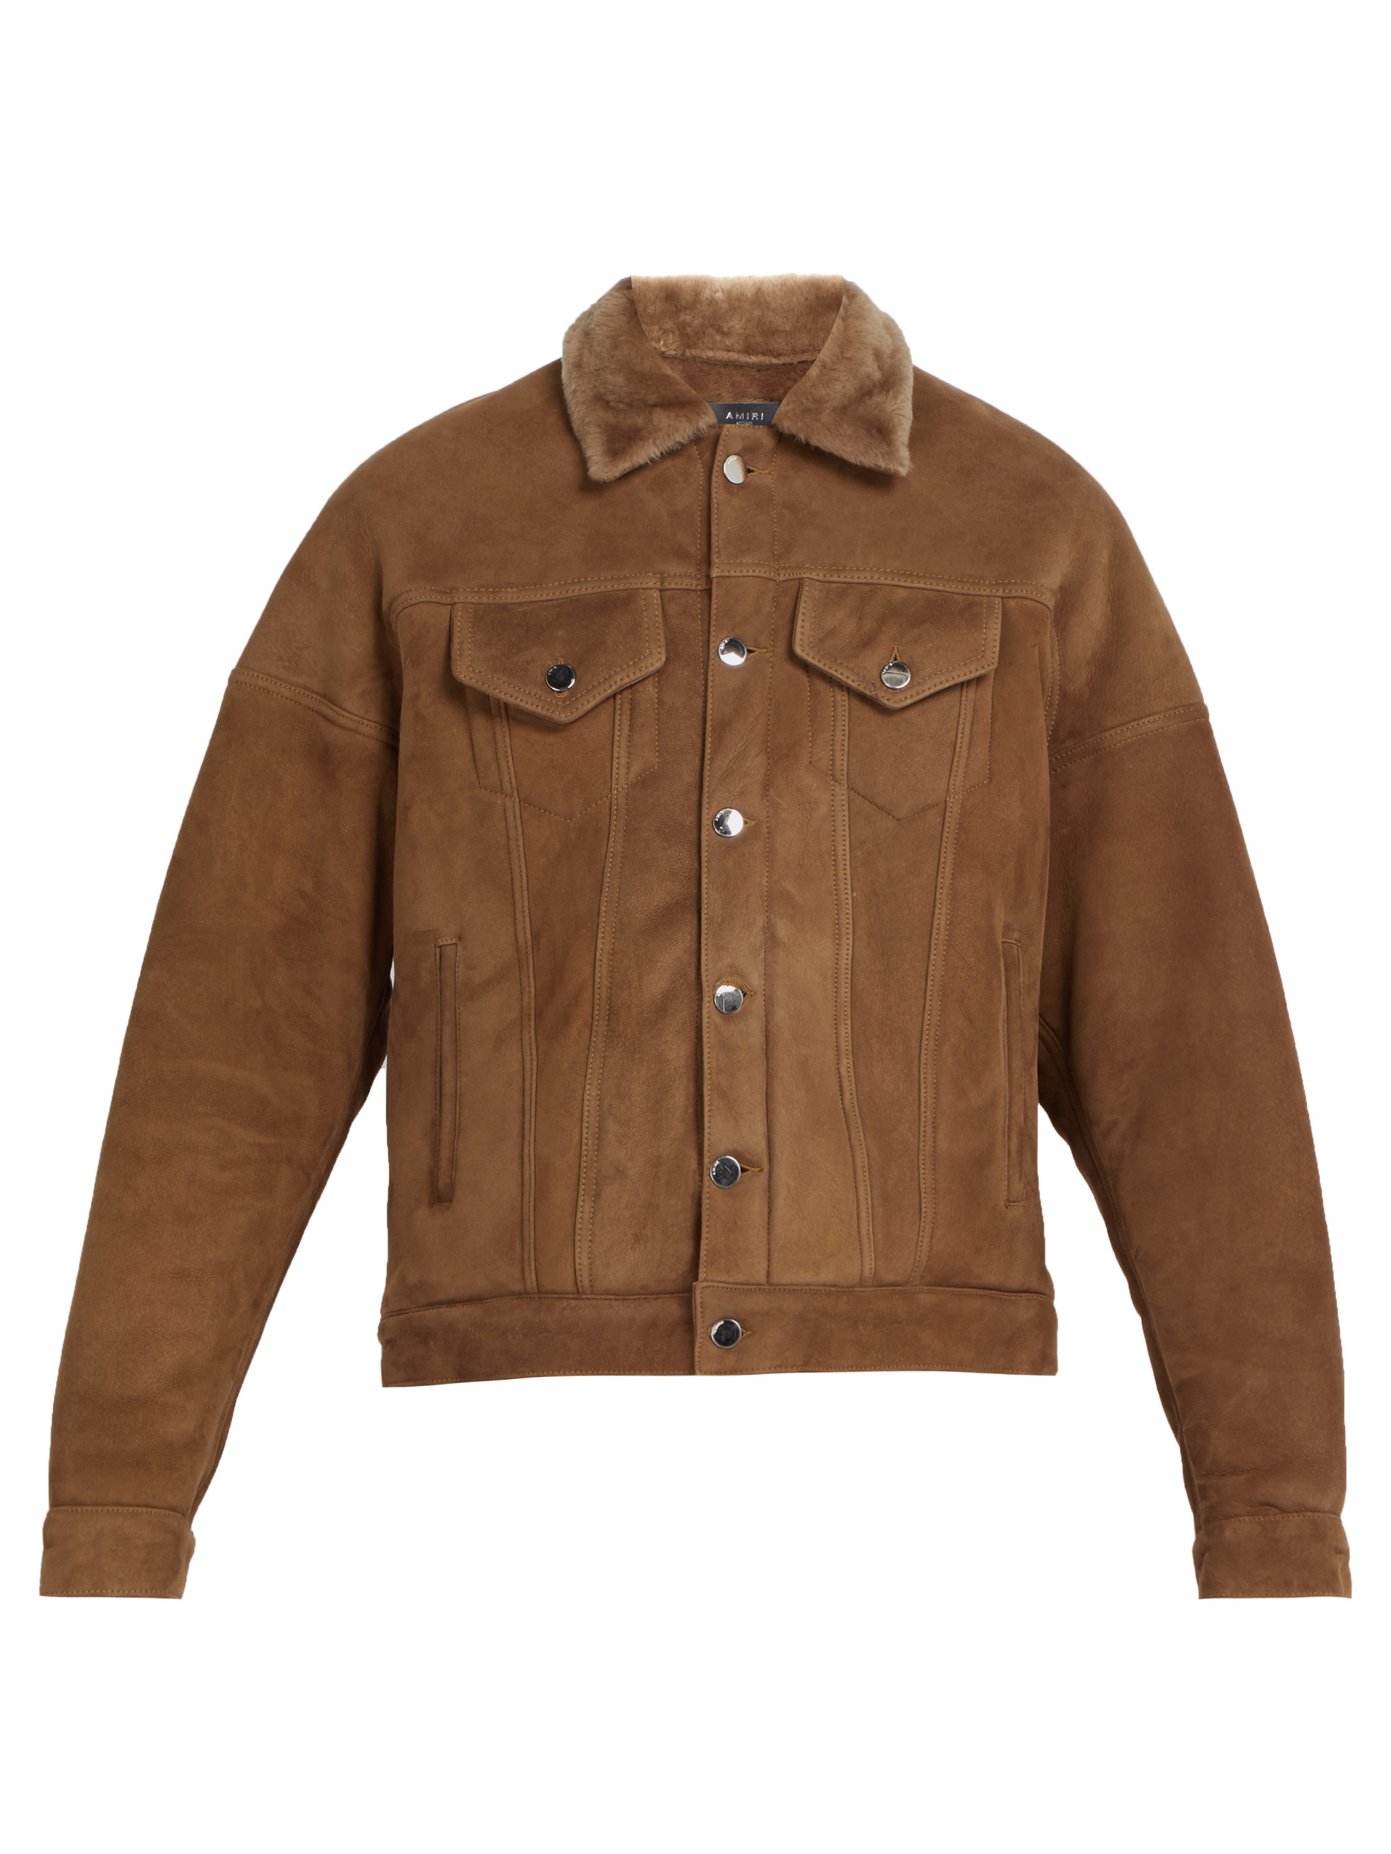 brown trucker jacket